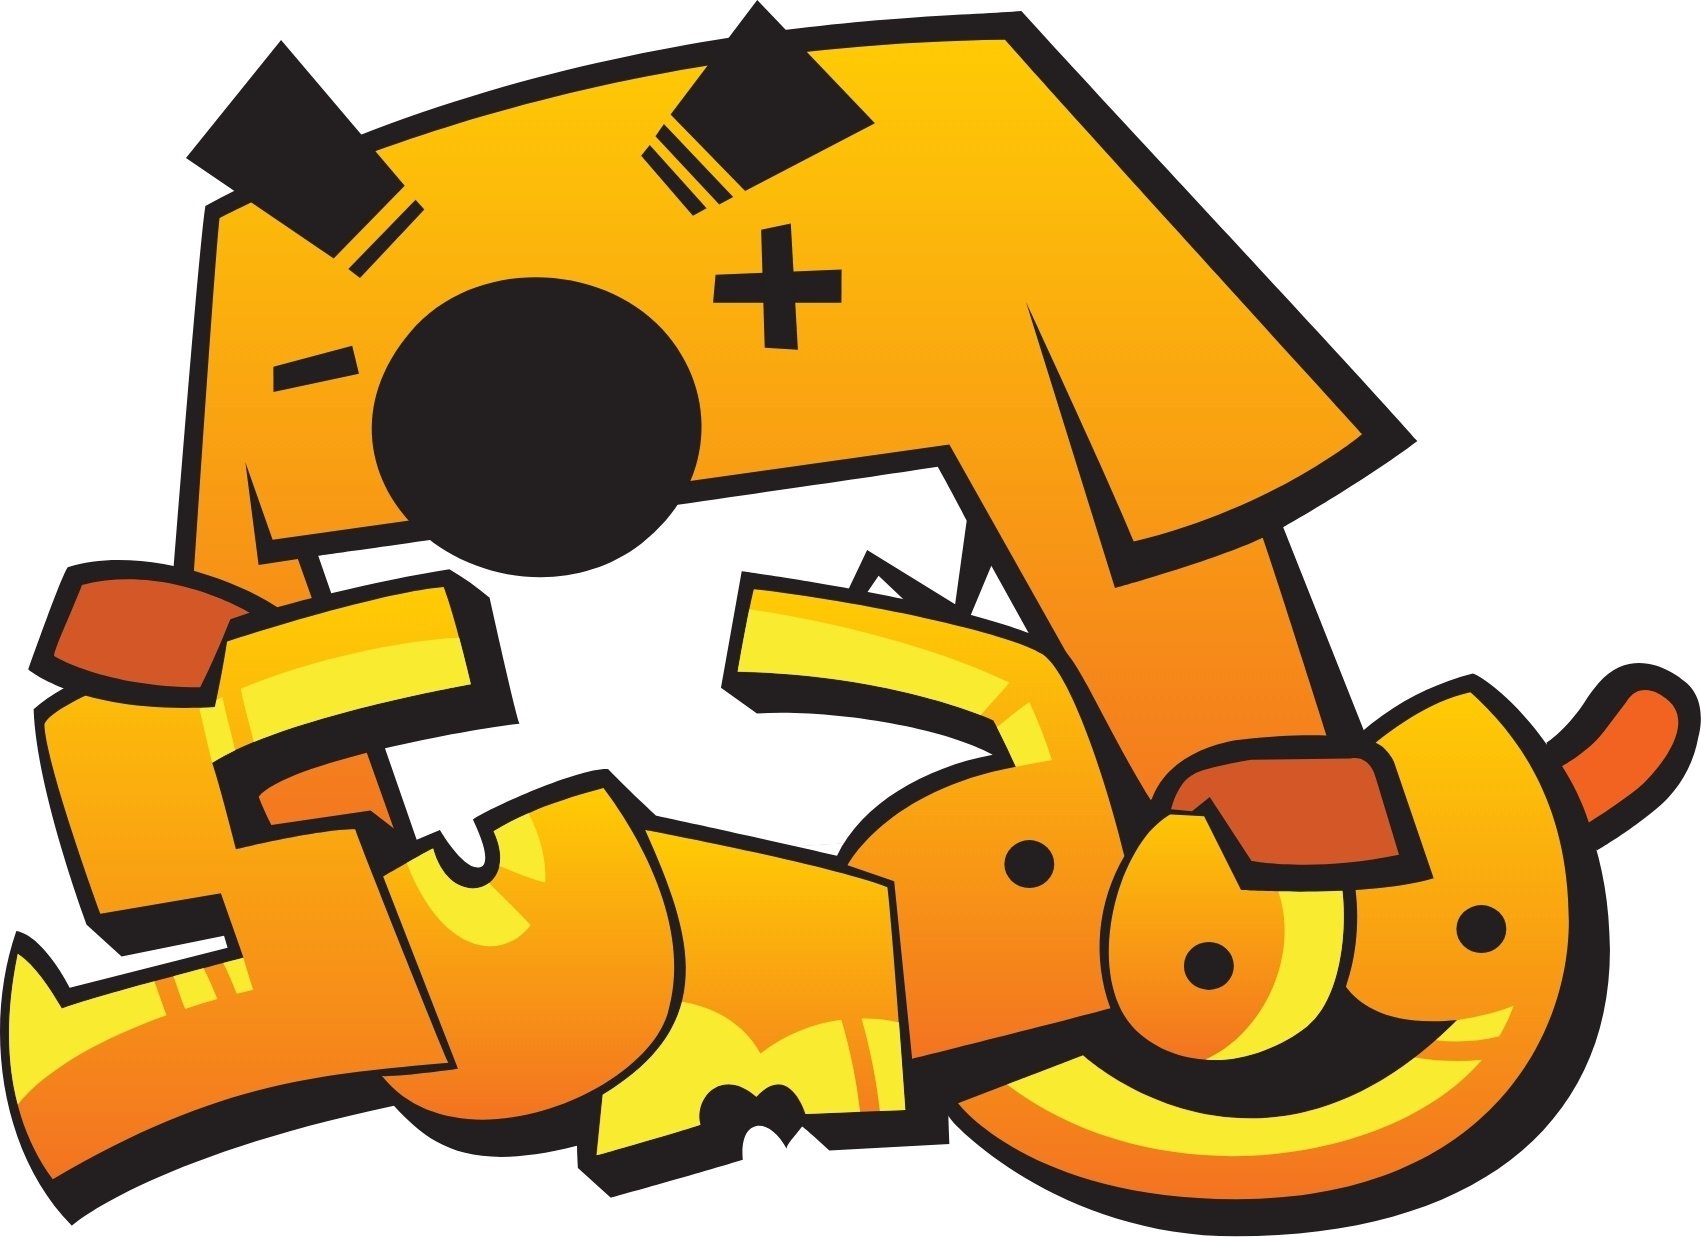 Sumdog logo - dog